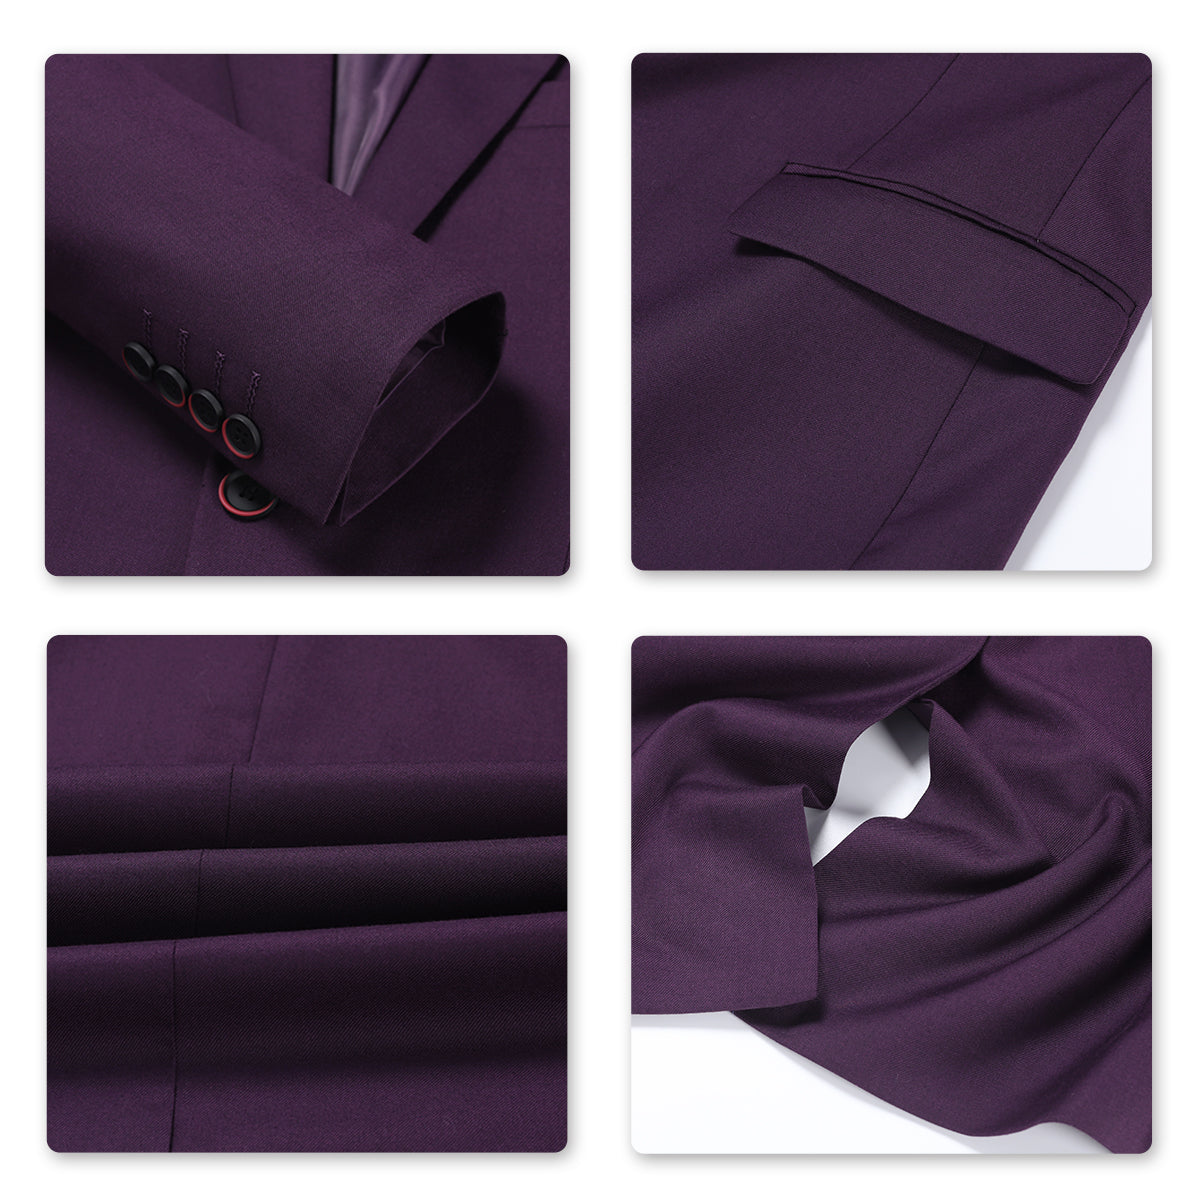 Mens Solid Color One Button Single Breasted Blazer Purple